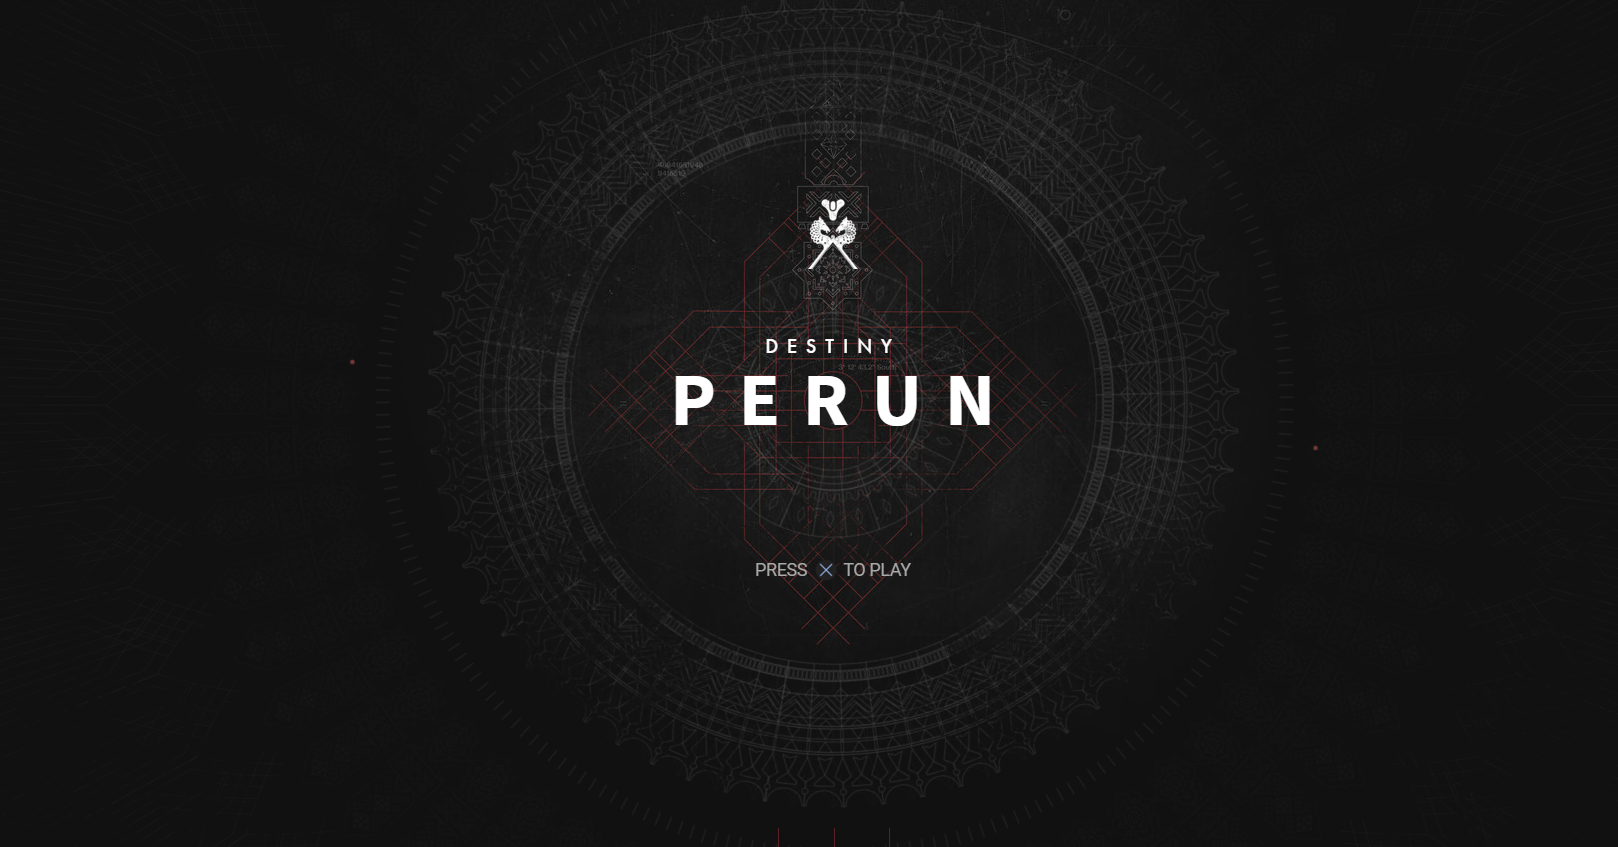 Destiny ペルン好き集まれー ペルン好きによるペルン好きのためのペルン特設サイト ゲーム攻略のまるはし